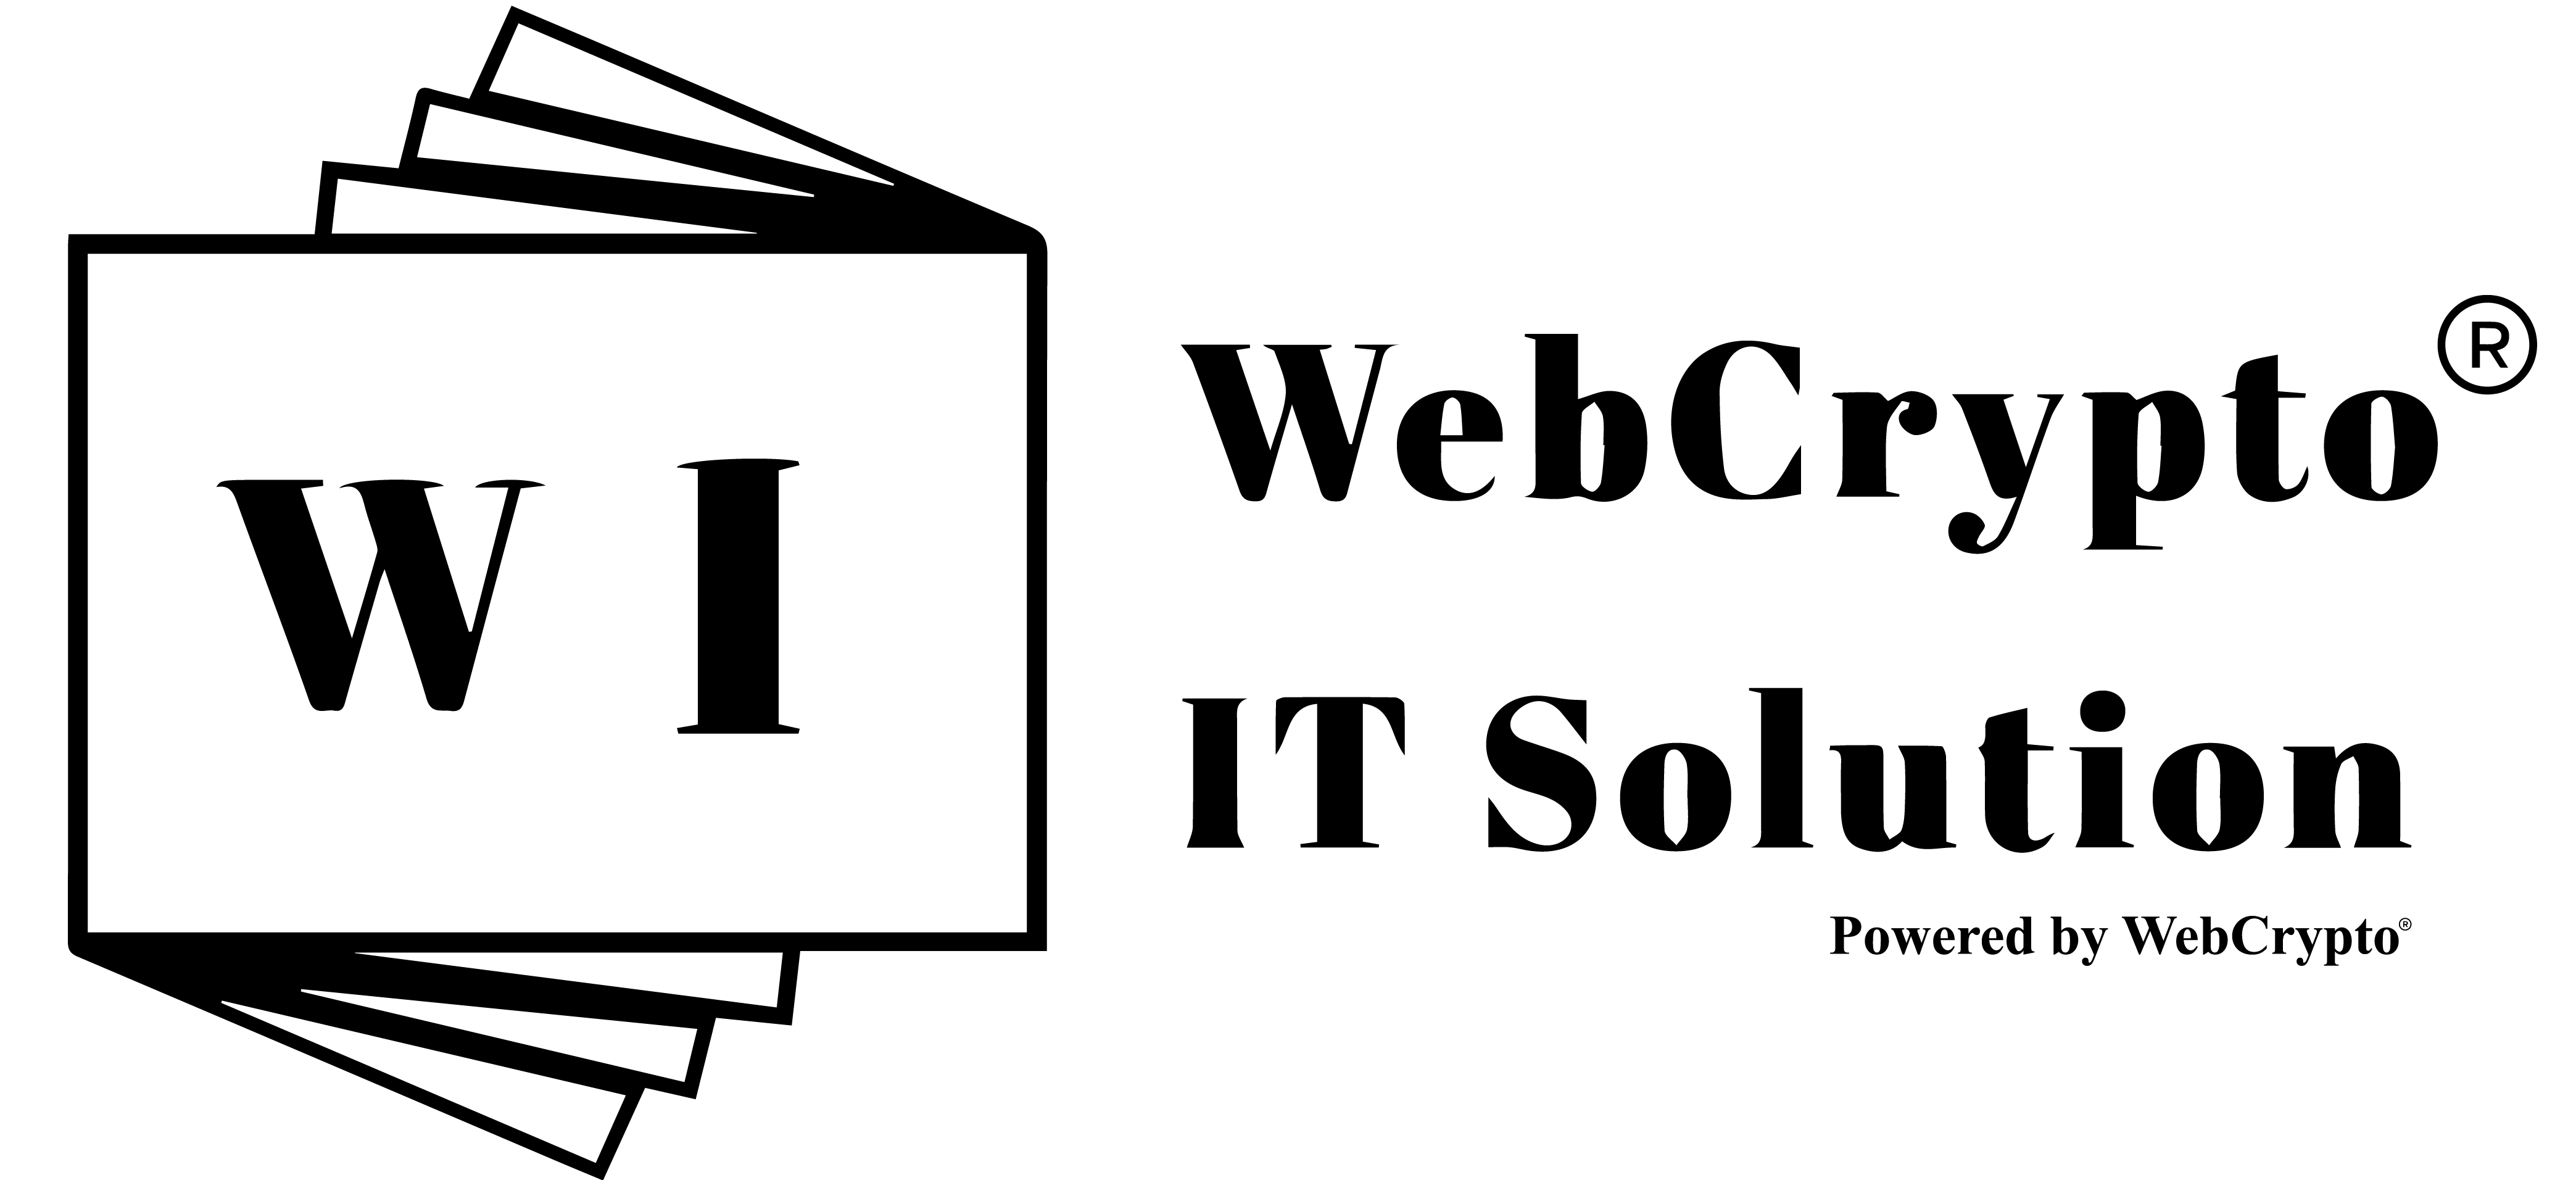 Webcrypto IT Solution